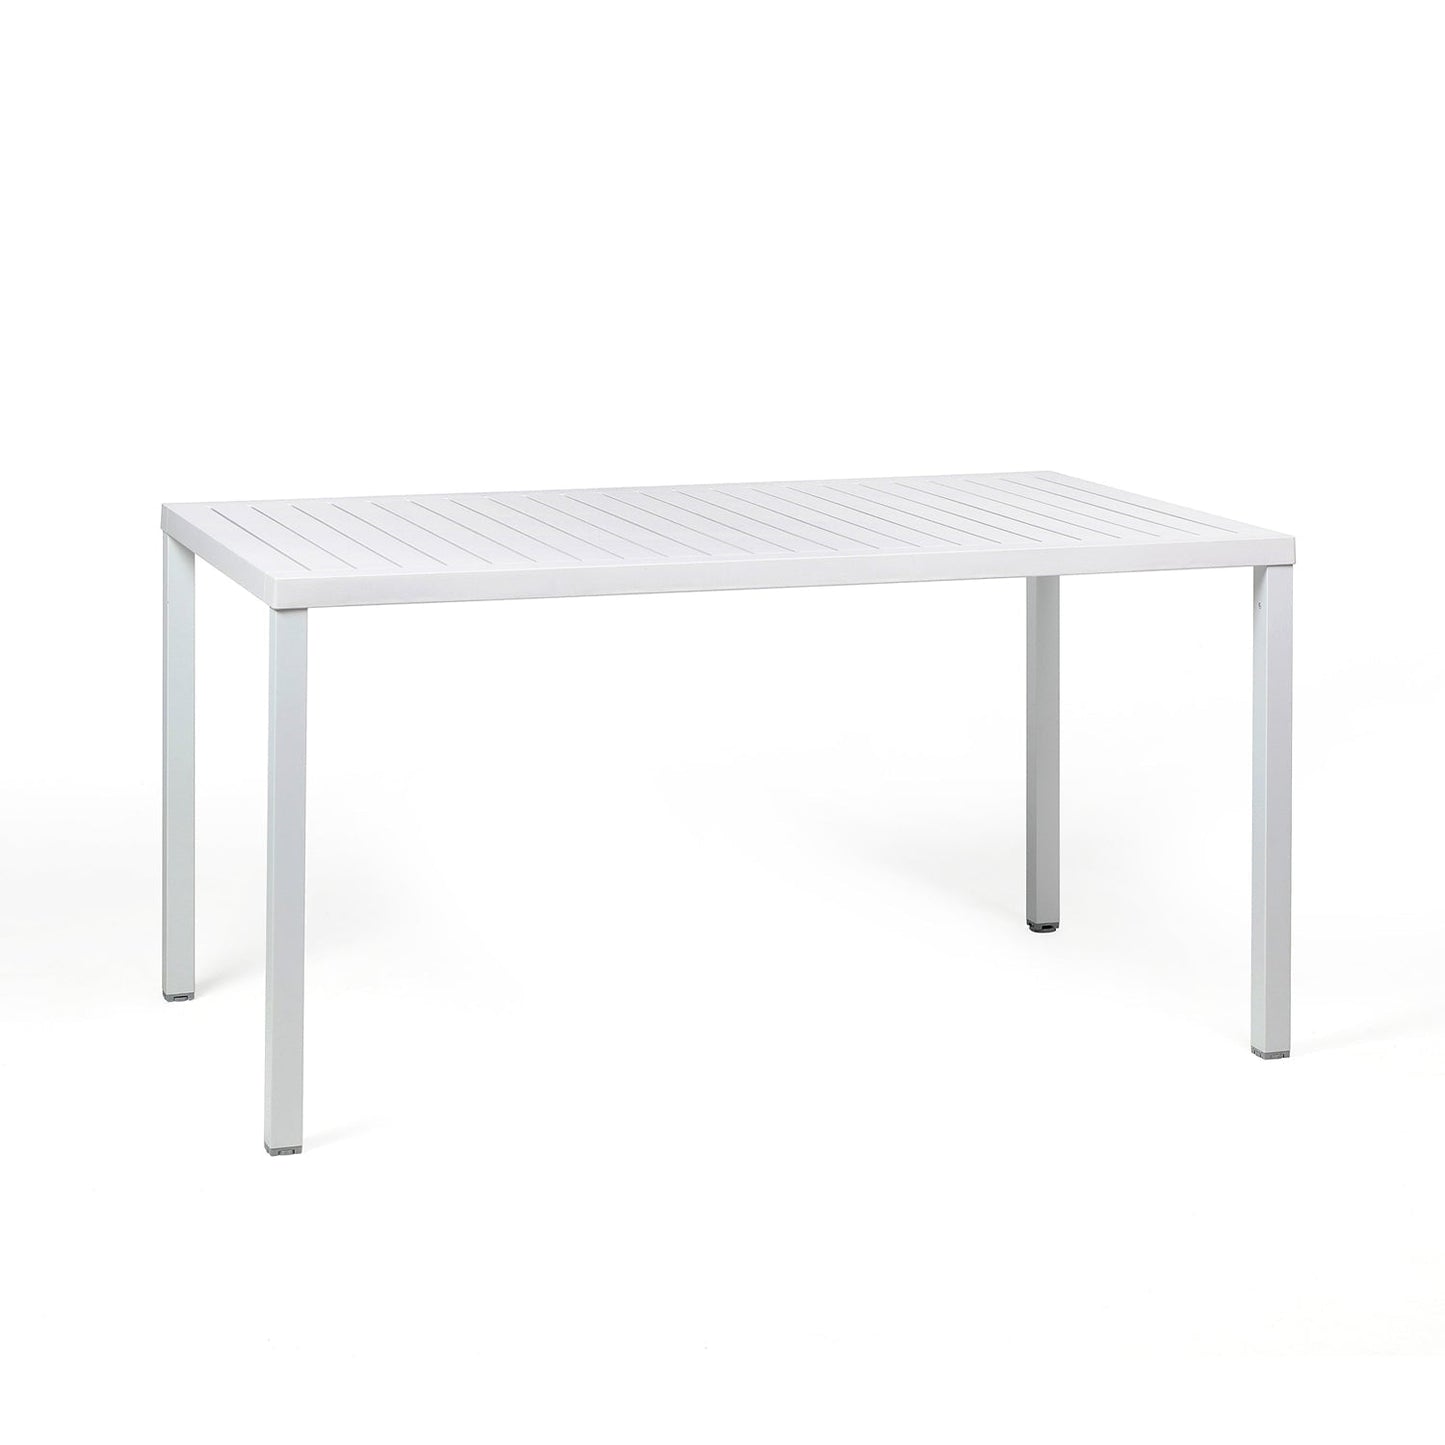 Cube 140 Garden Table In White